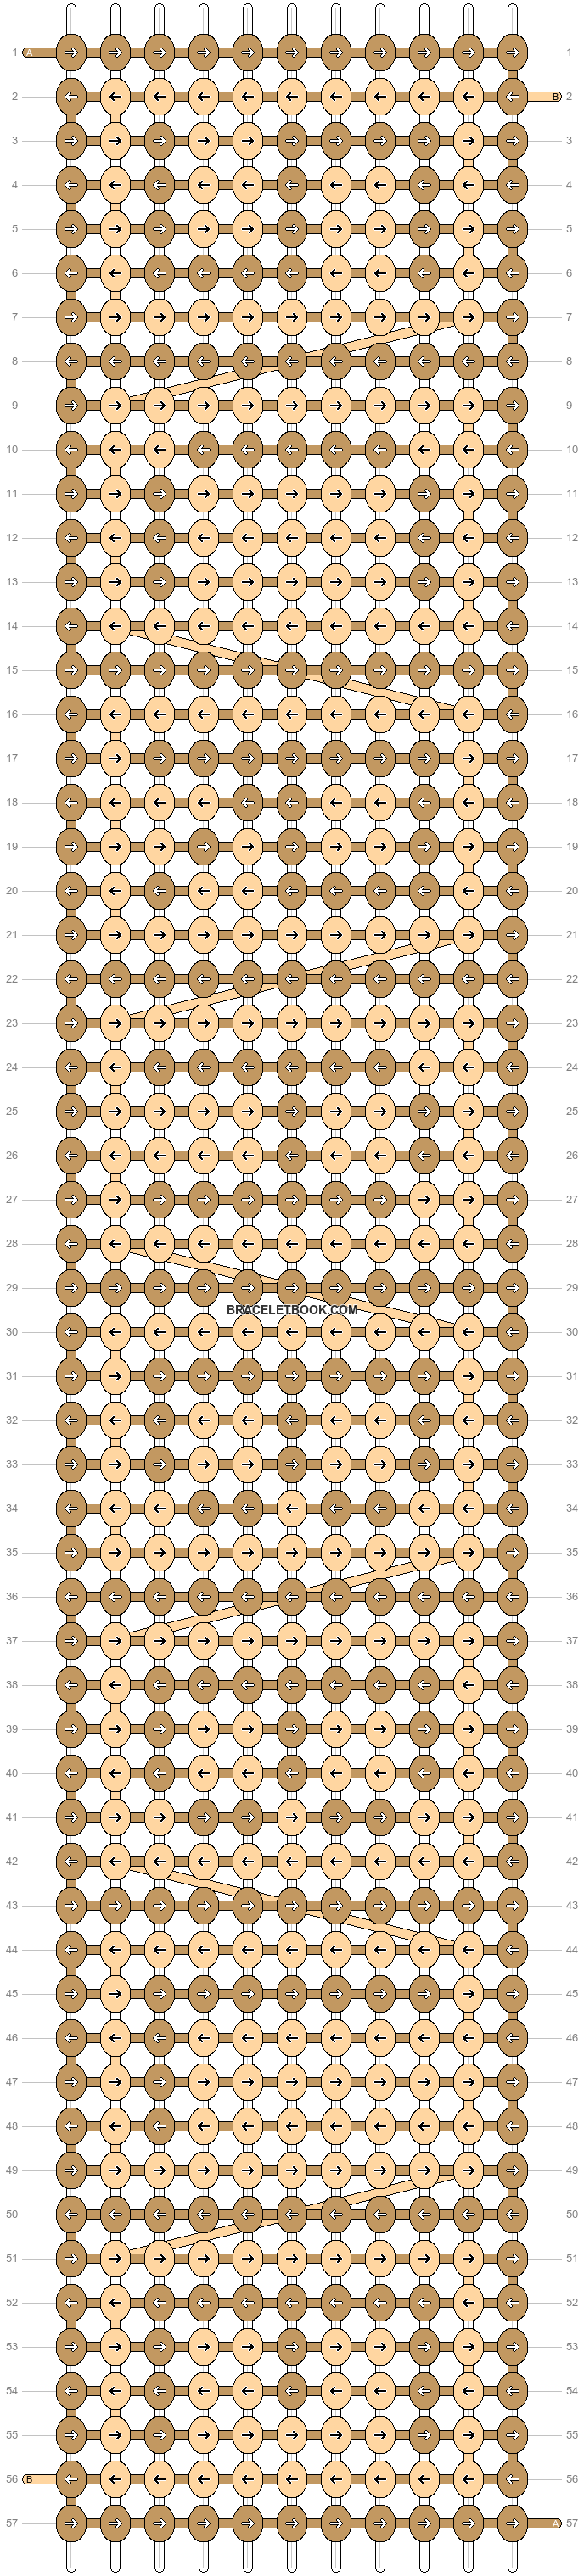 Alpha pattern #2895 variation #55362 pattern